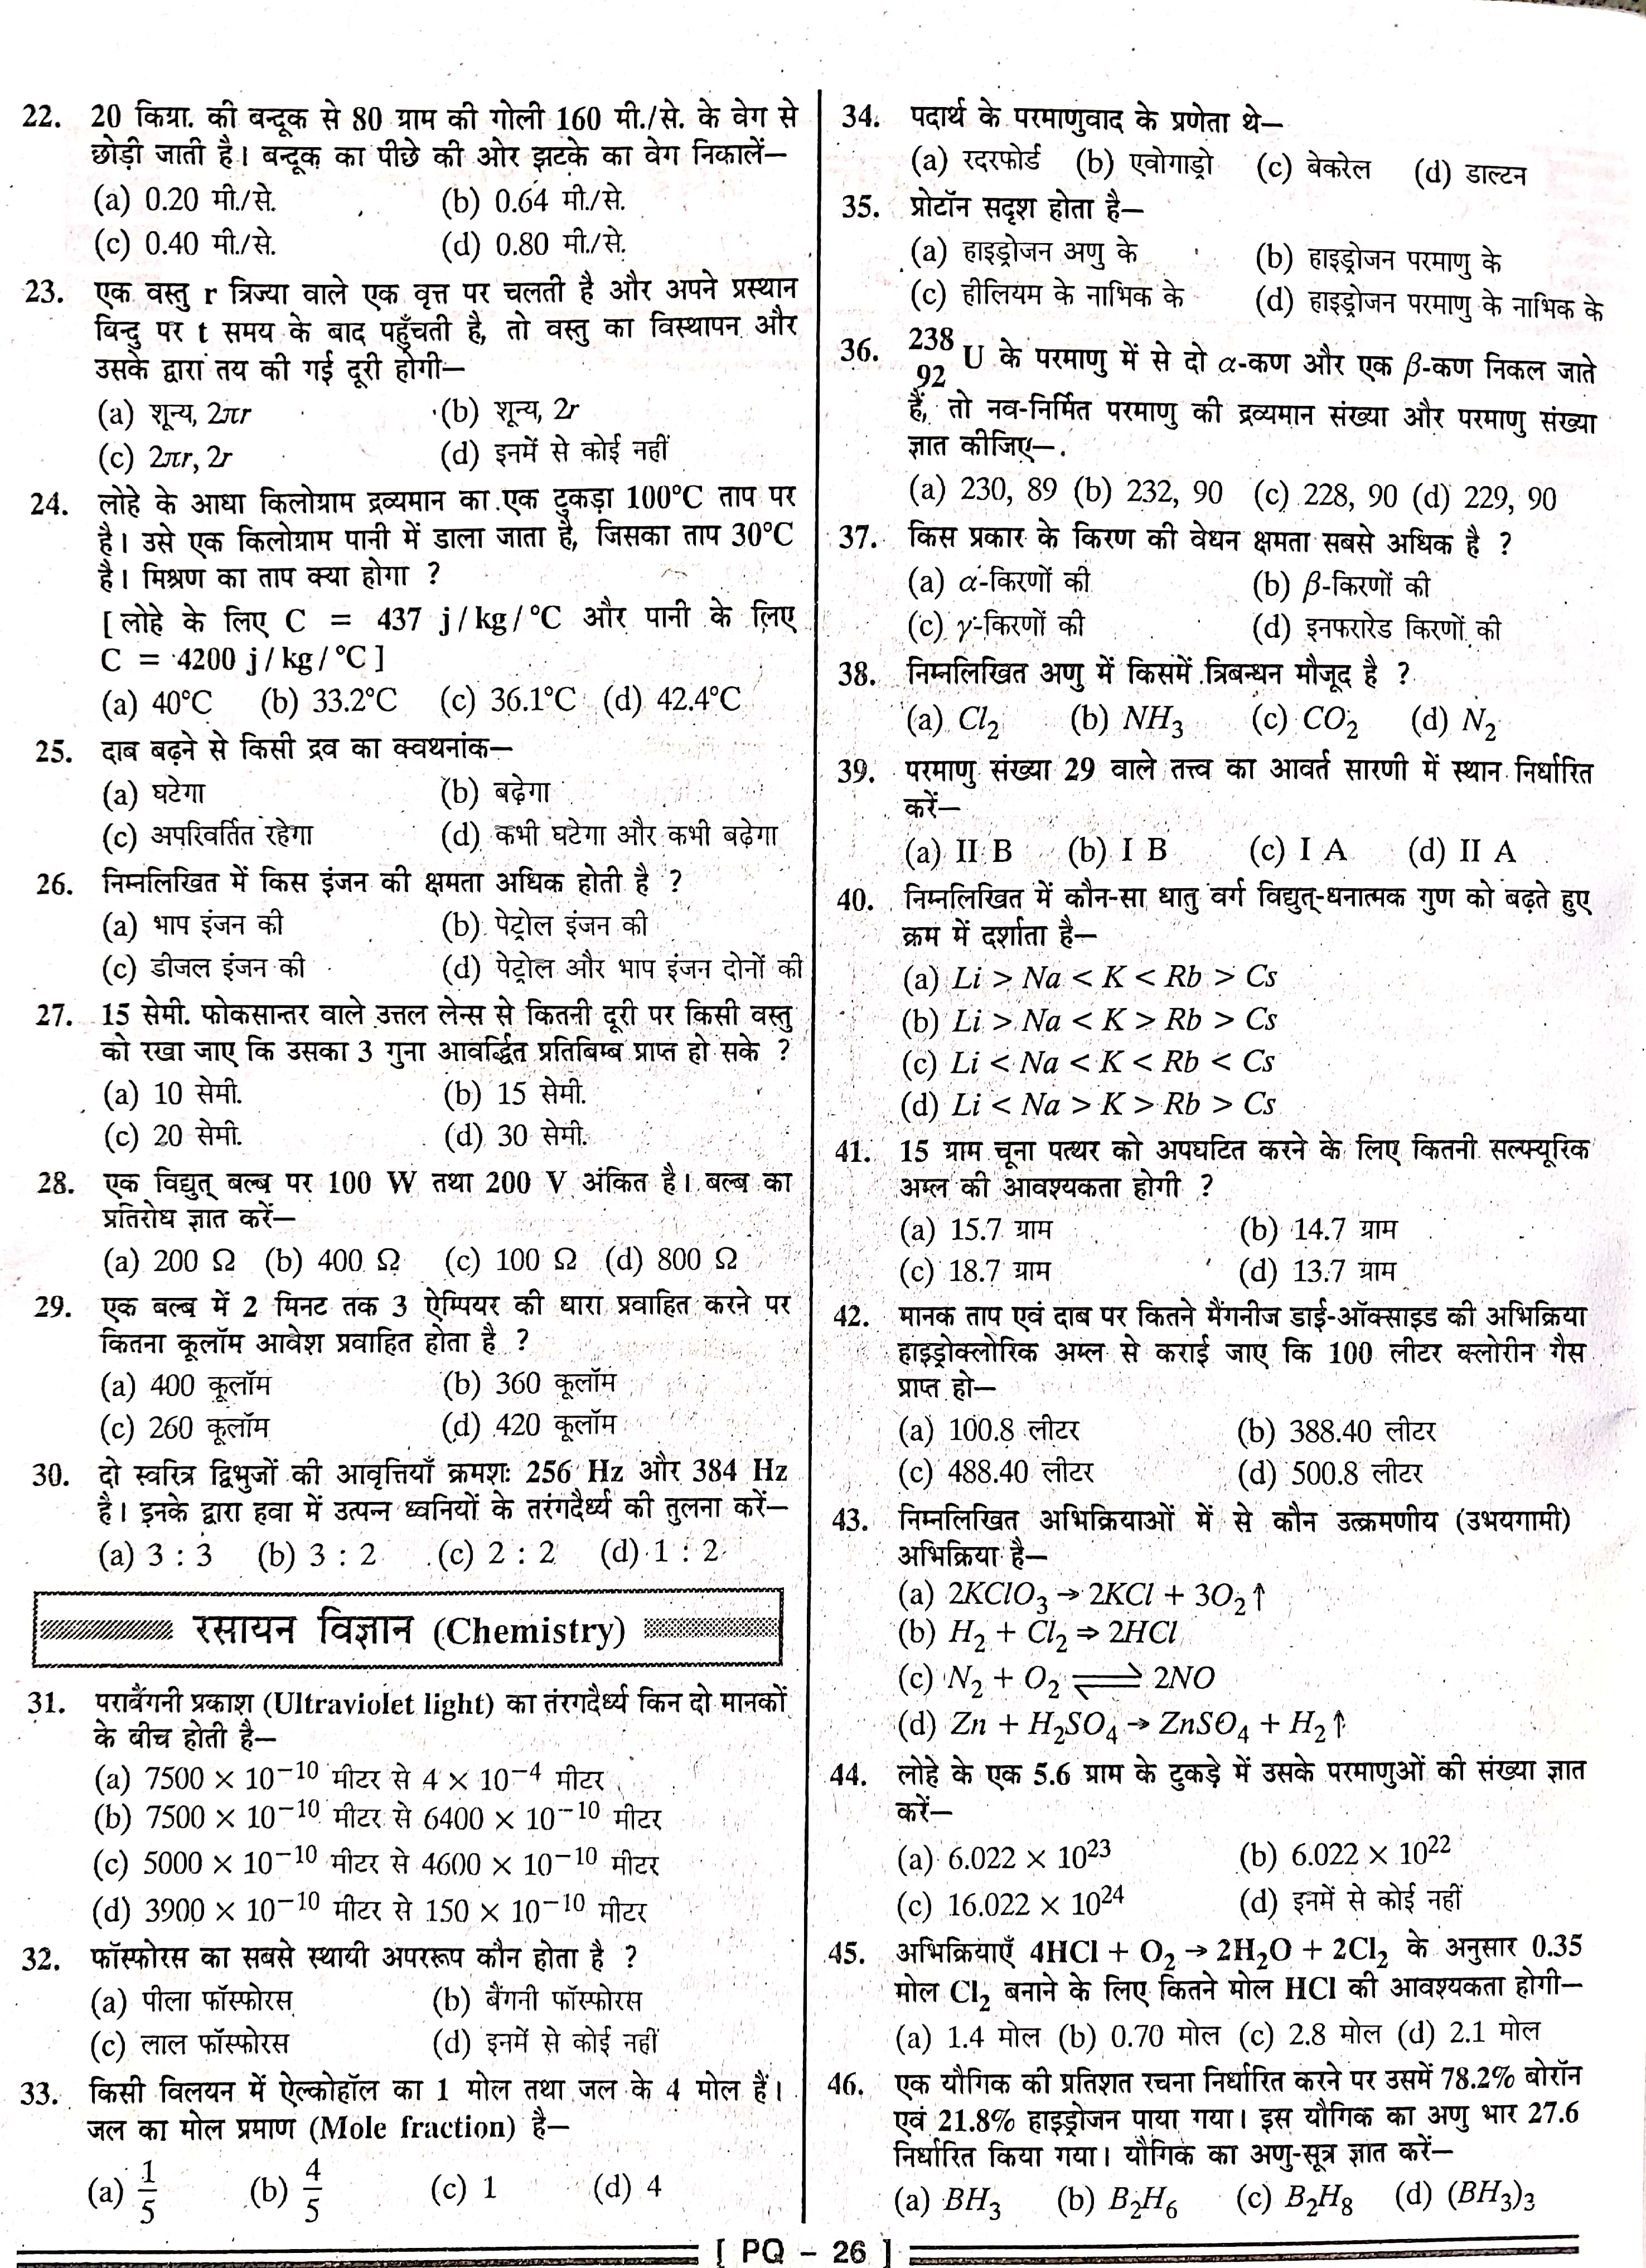 Bihar Polytechnic Question 2004